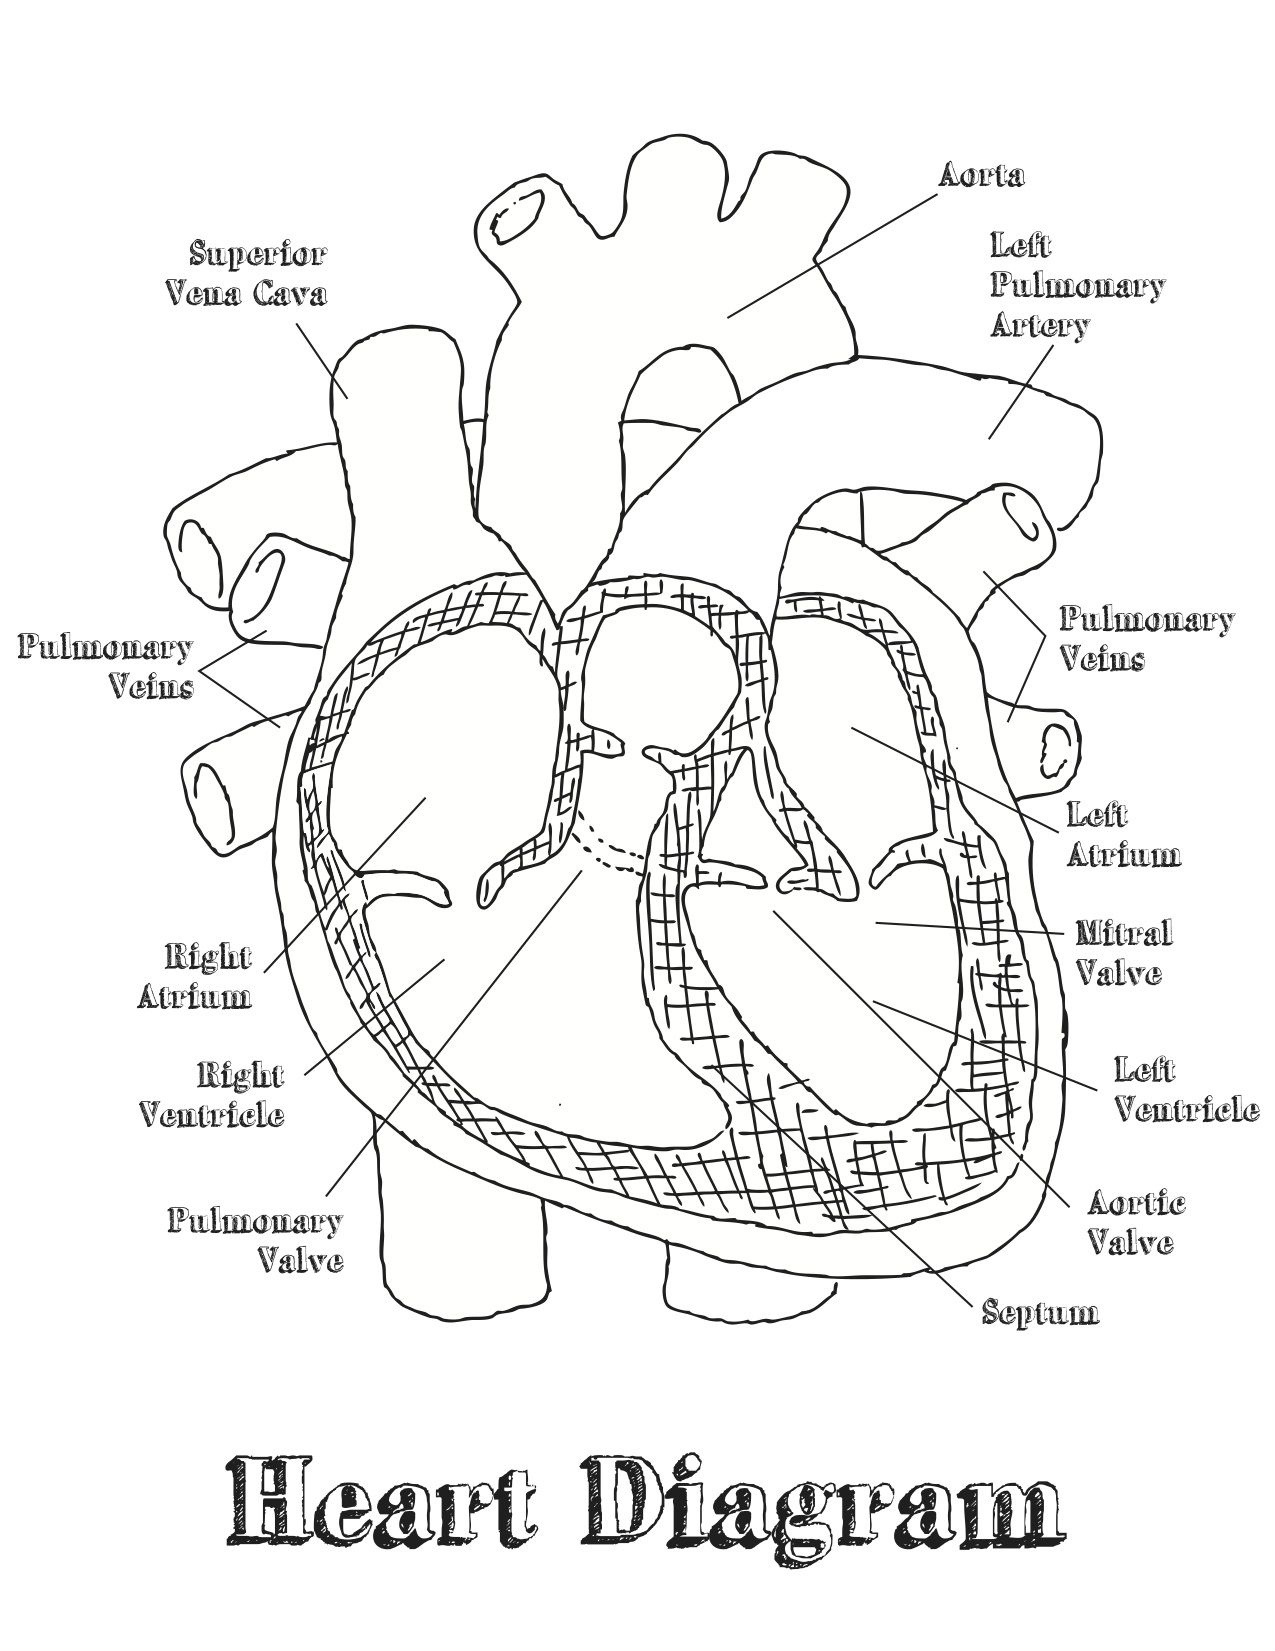 Heart Diagram Labeled Worksheet Google Search Heart Diagram Simple 